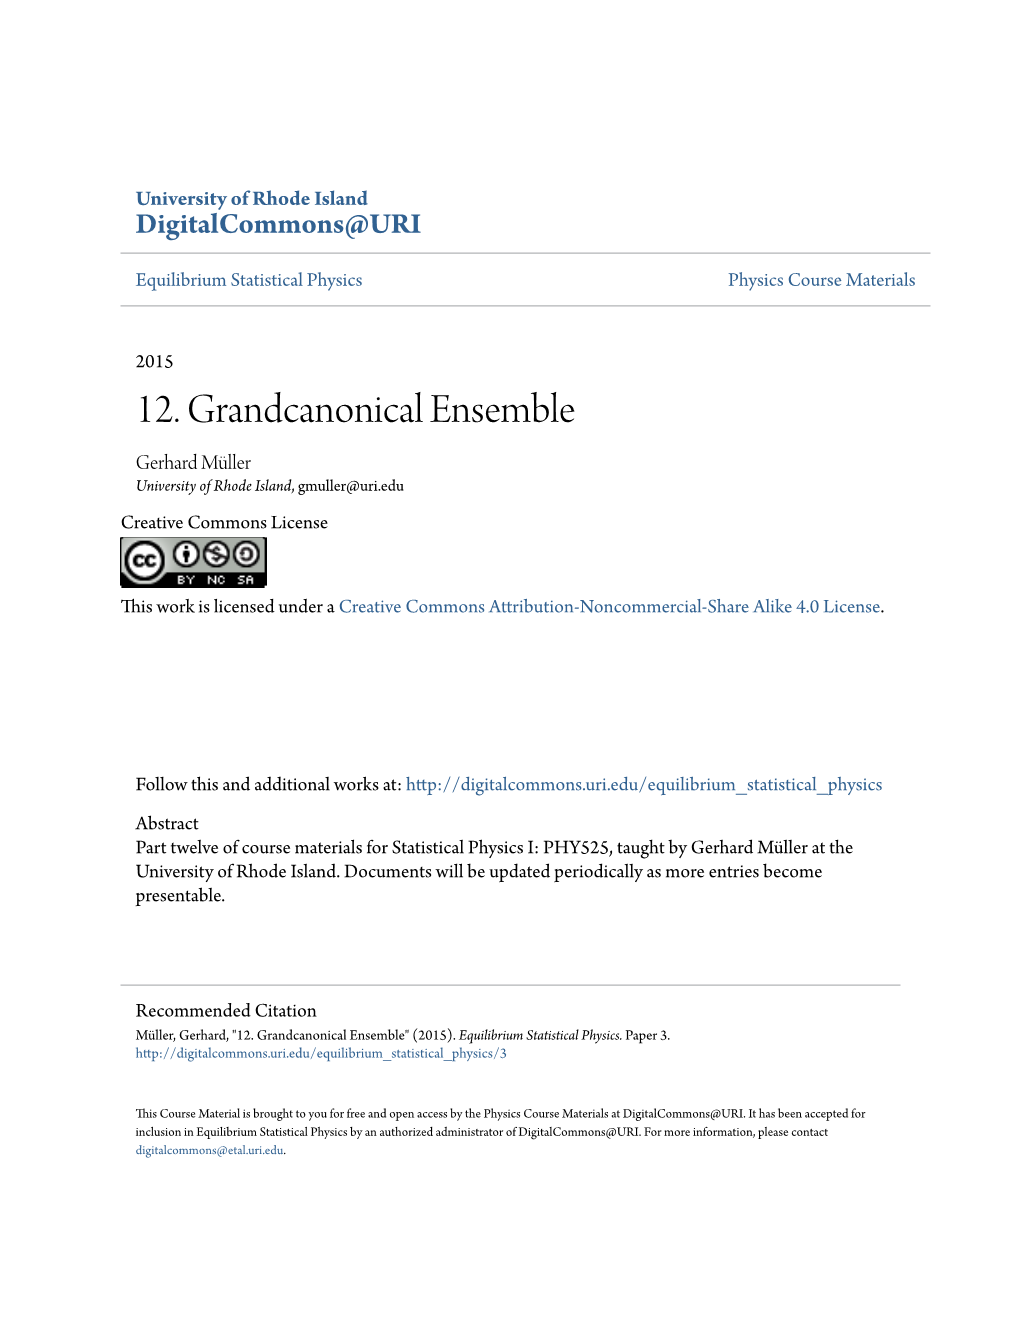 12. Grandcanonical Ensemble Gerhard Müller University of Rhode Island, Gmuller@Uri.Edu Creative Commons License